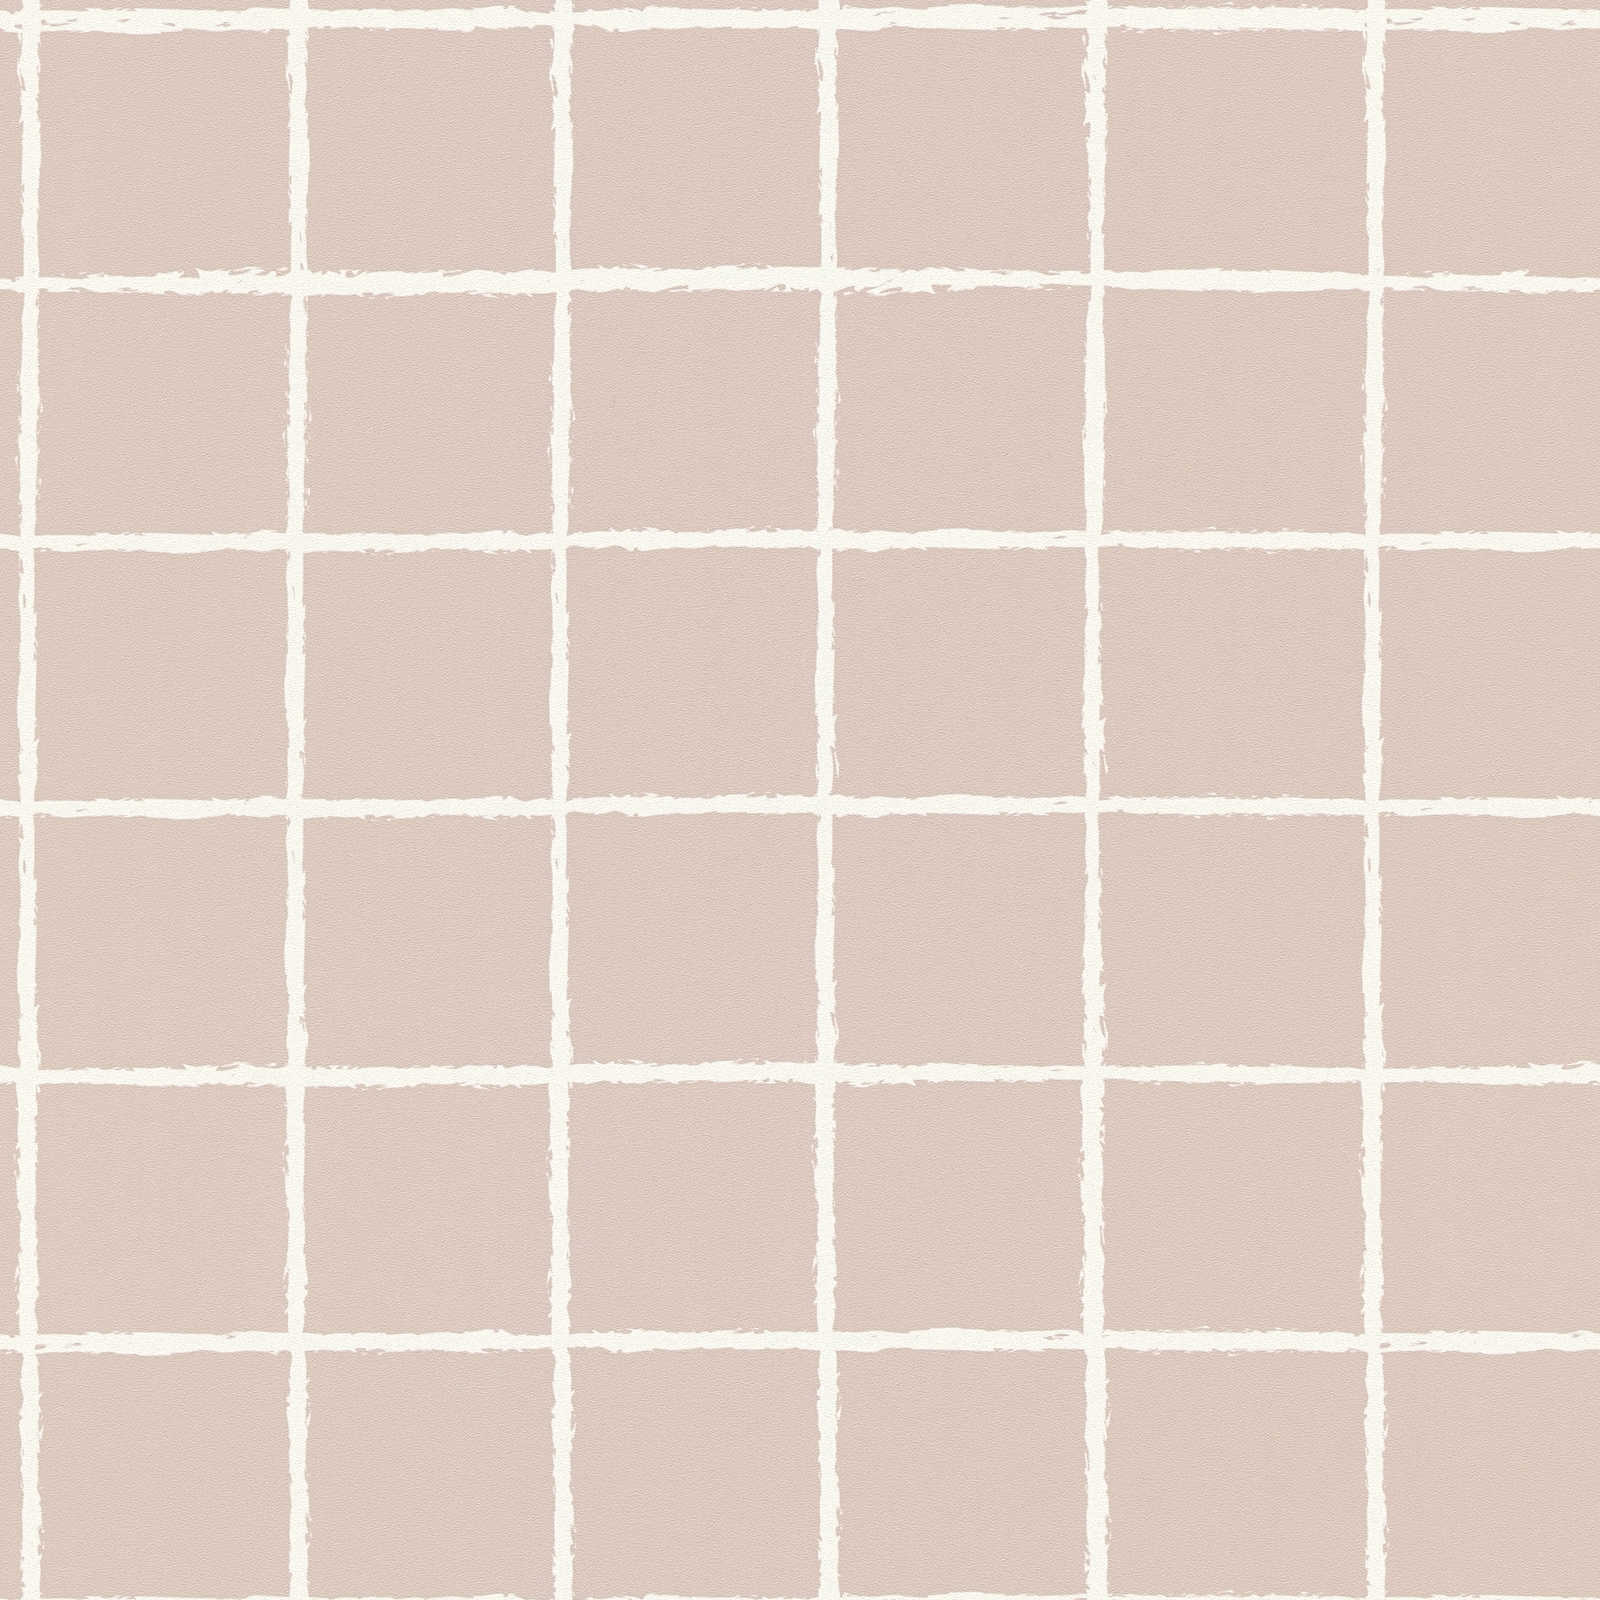             Non-woven wallpaper with drawn net pattern - pink, white
        